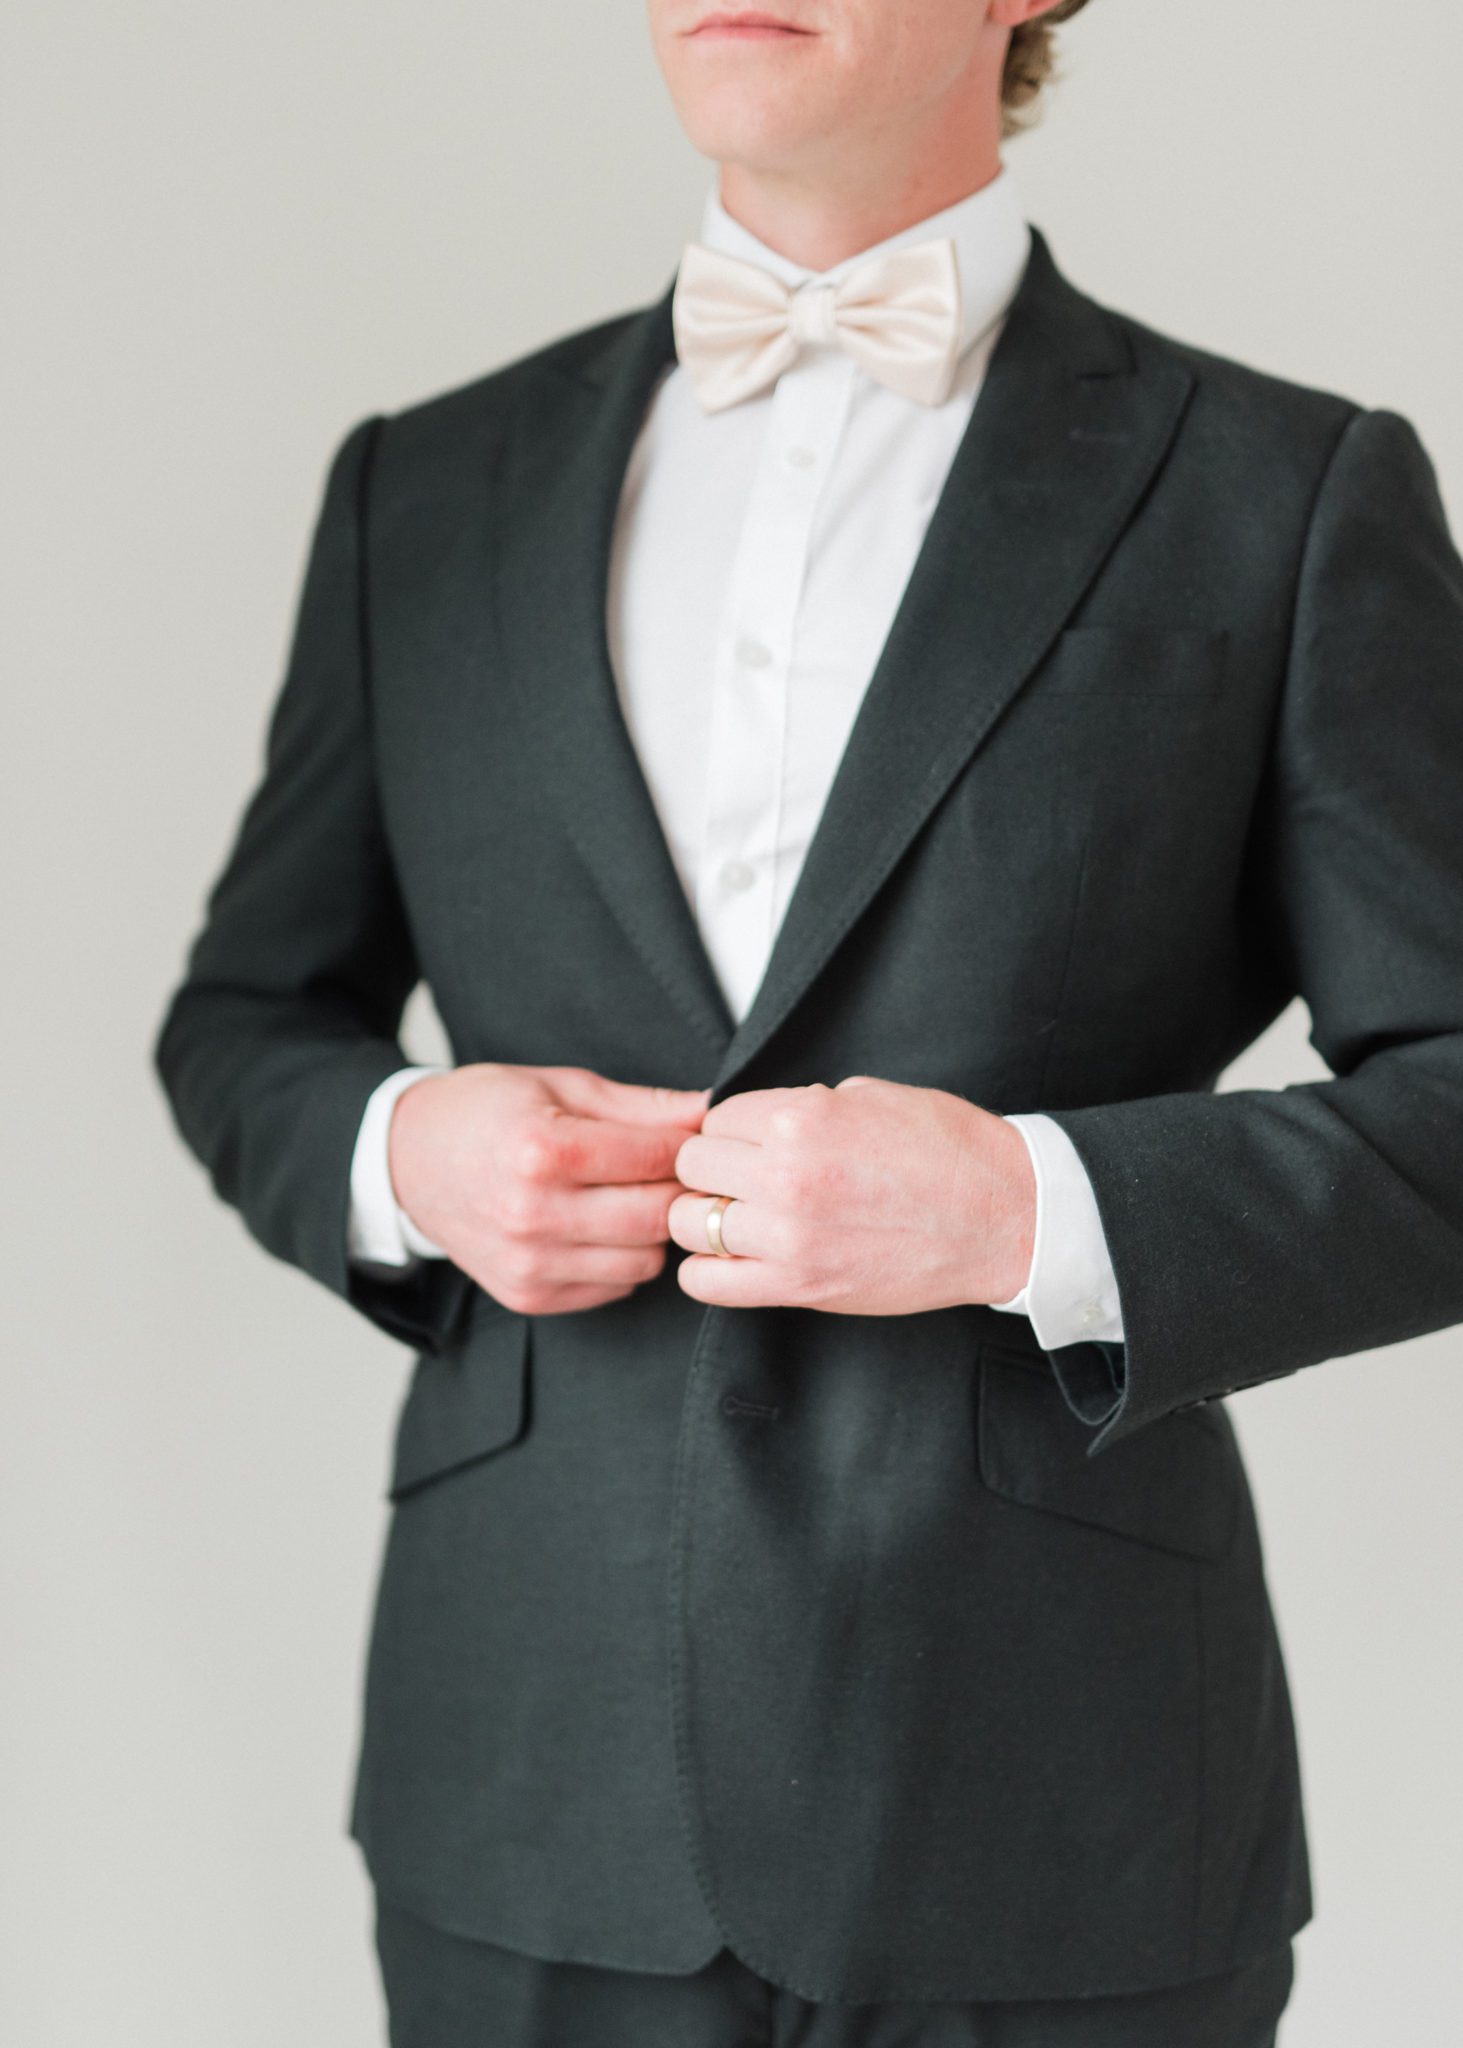 Groom wedding attire inspiration in a black suit